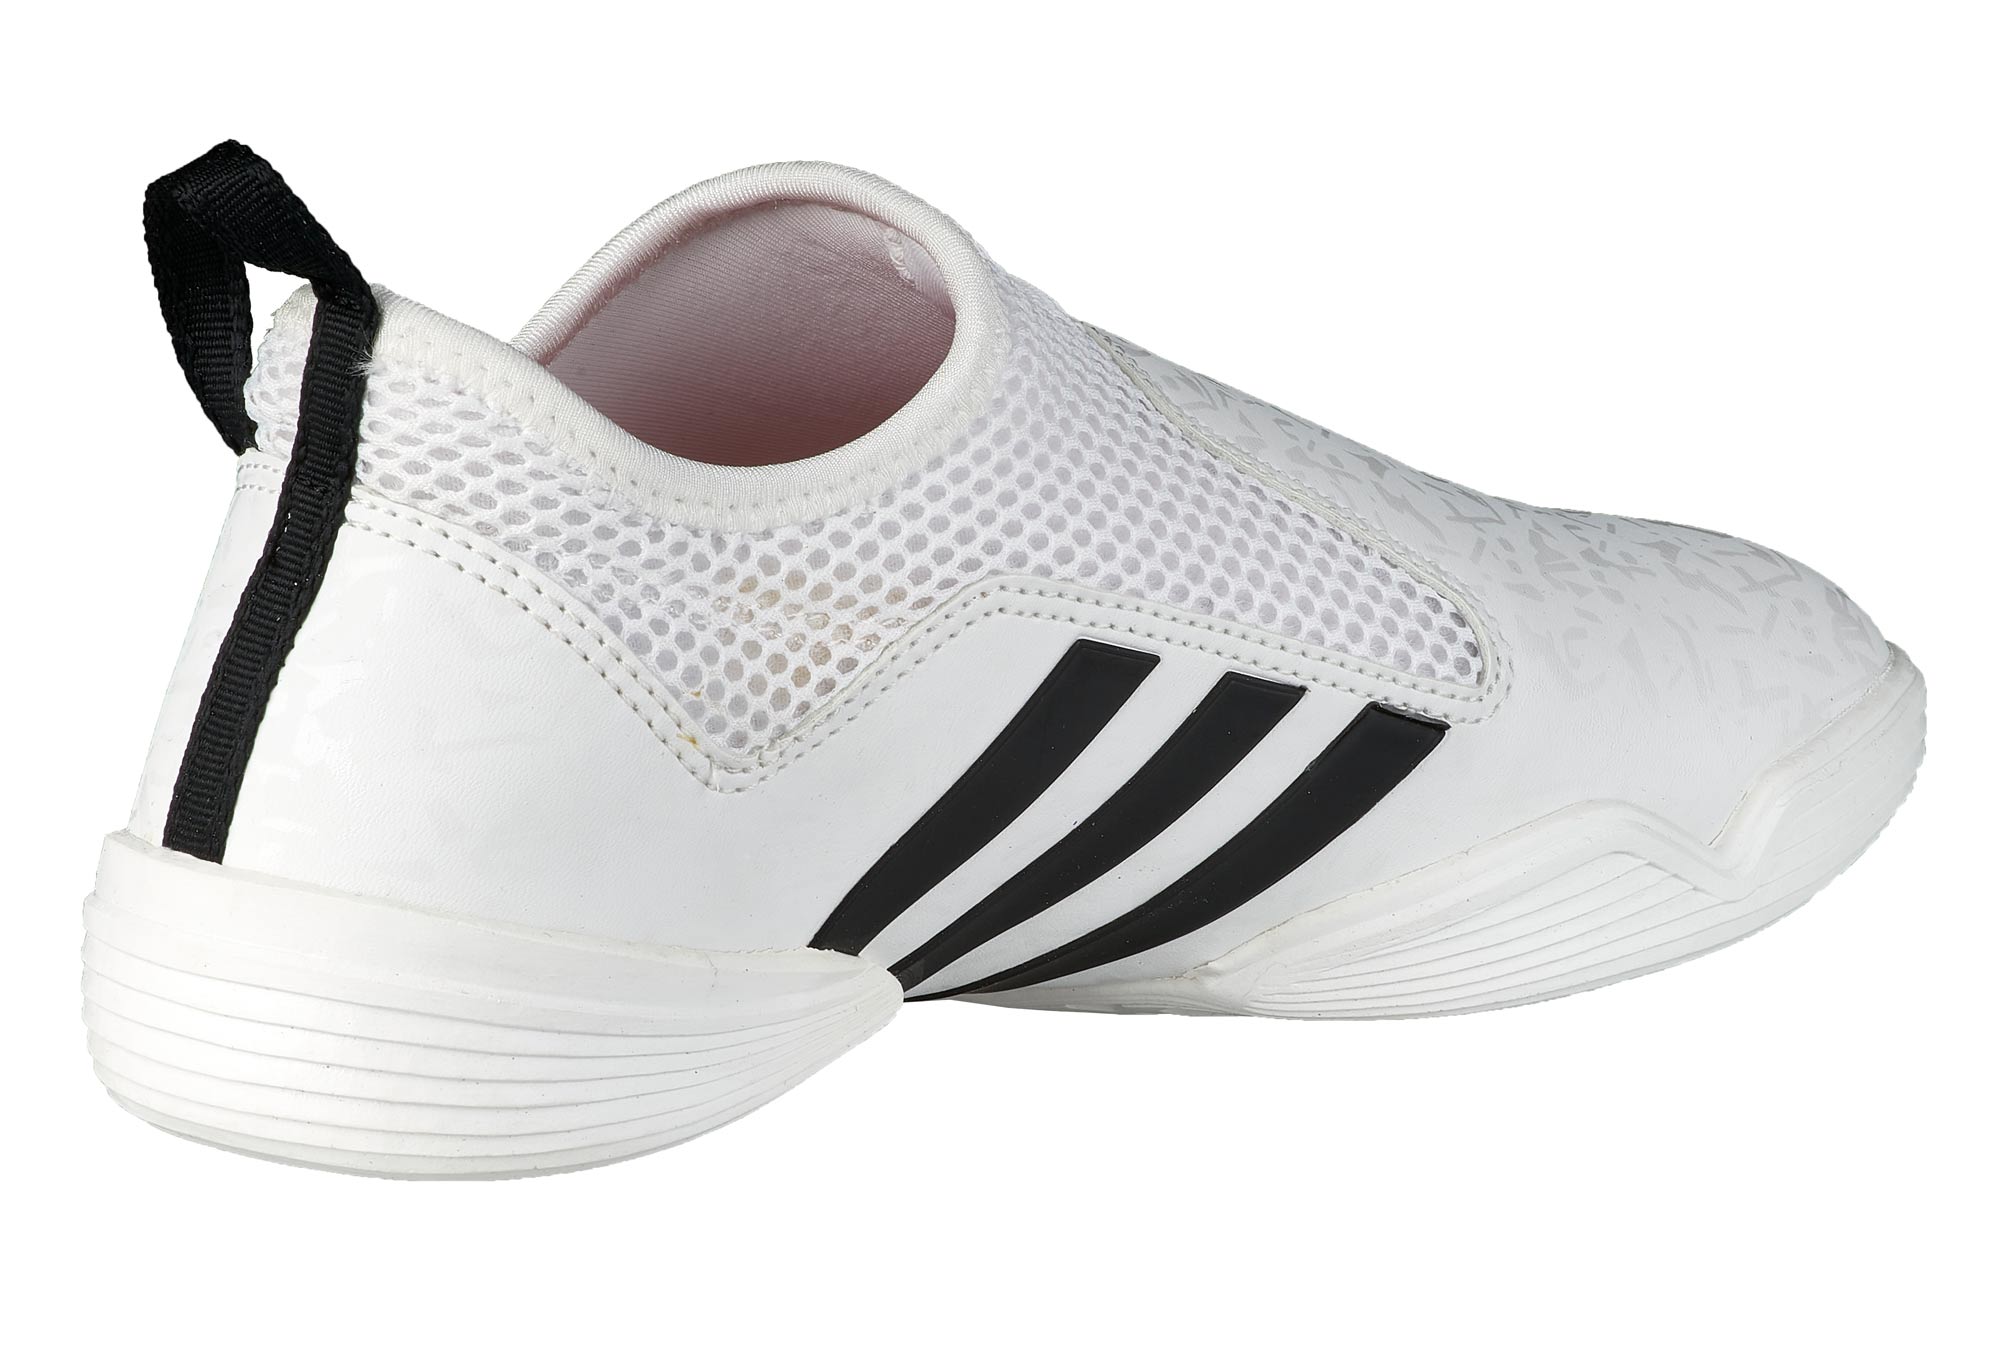 adidas Taekwondo Sneaker adi-bras weiß/schwarz ADITBR01